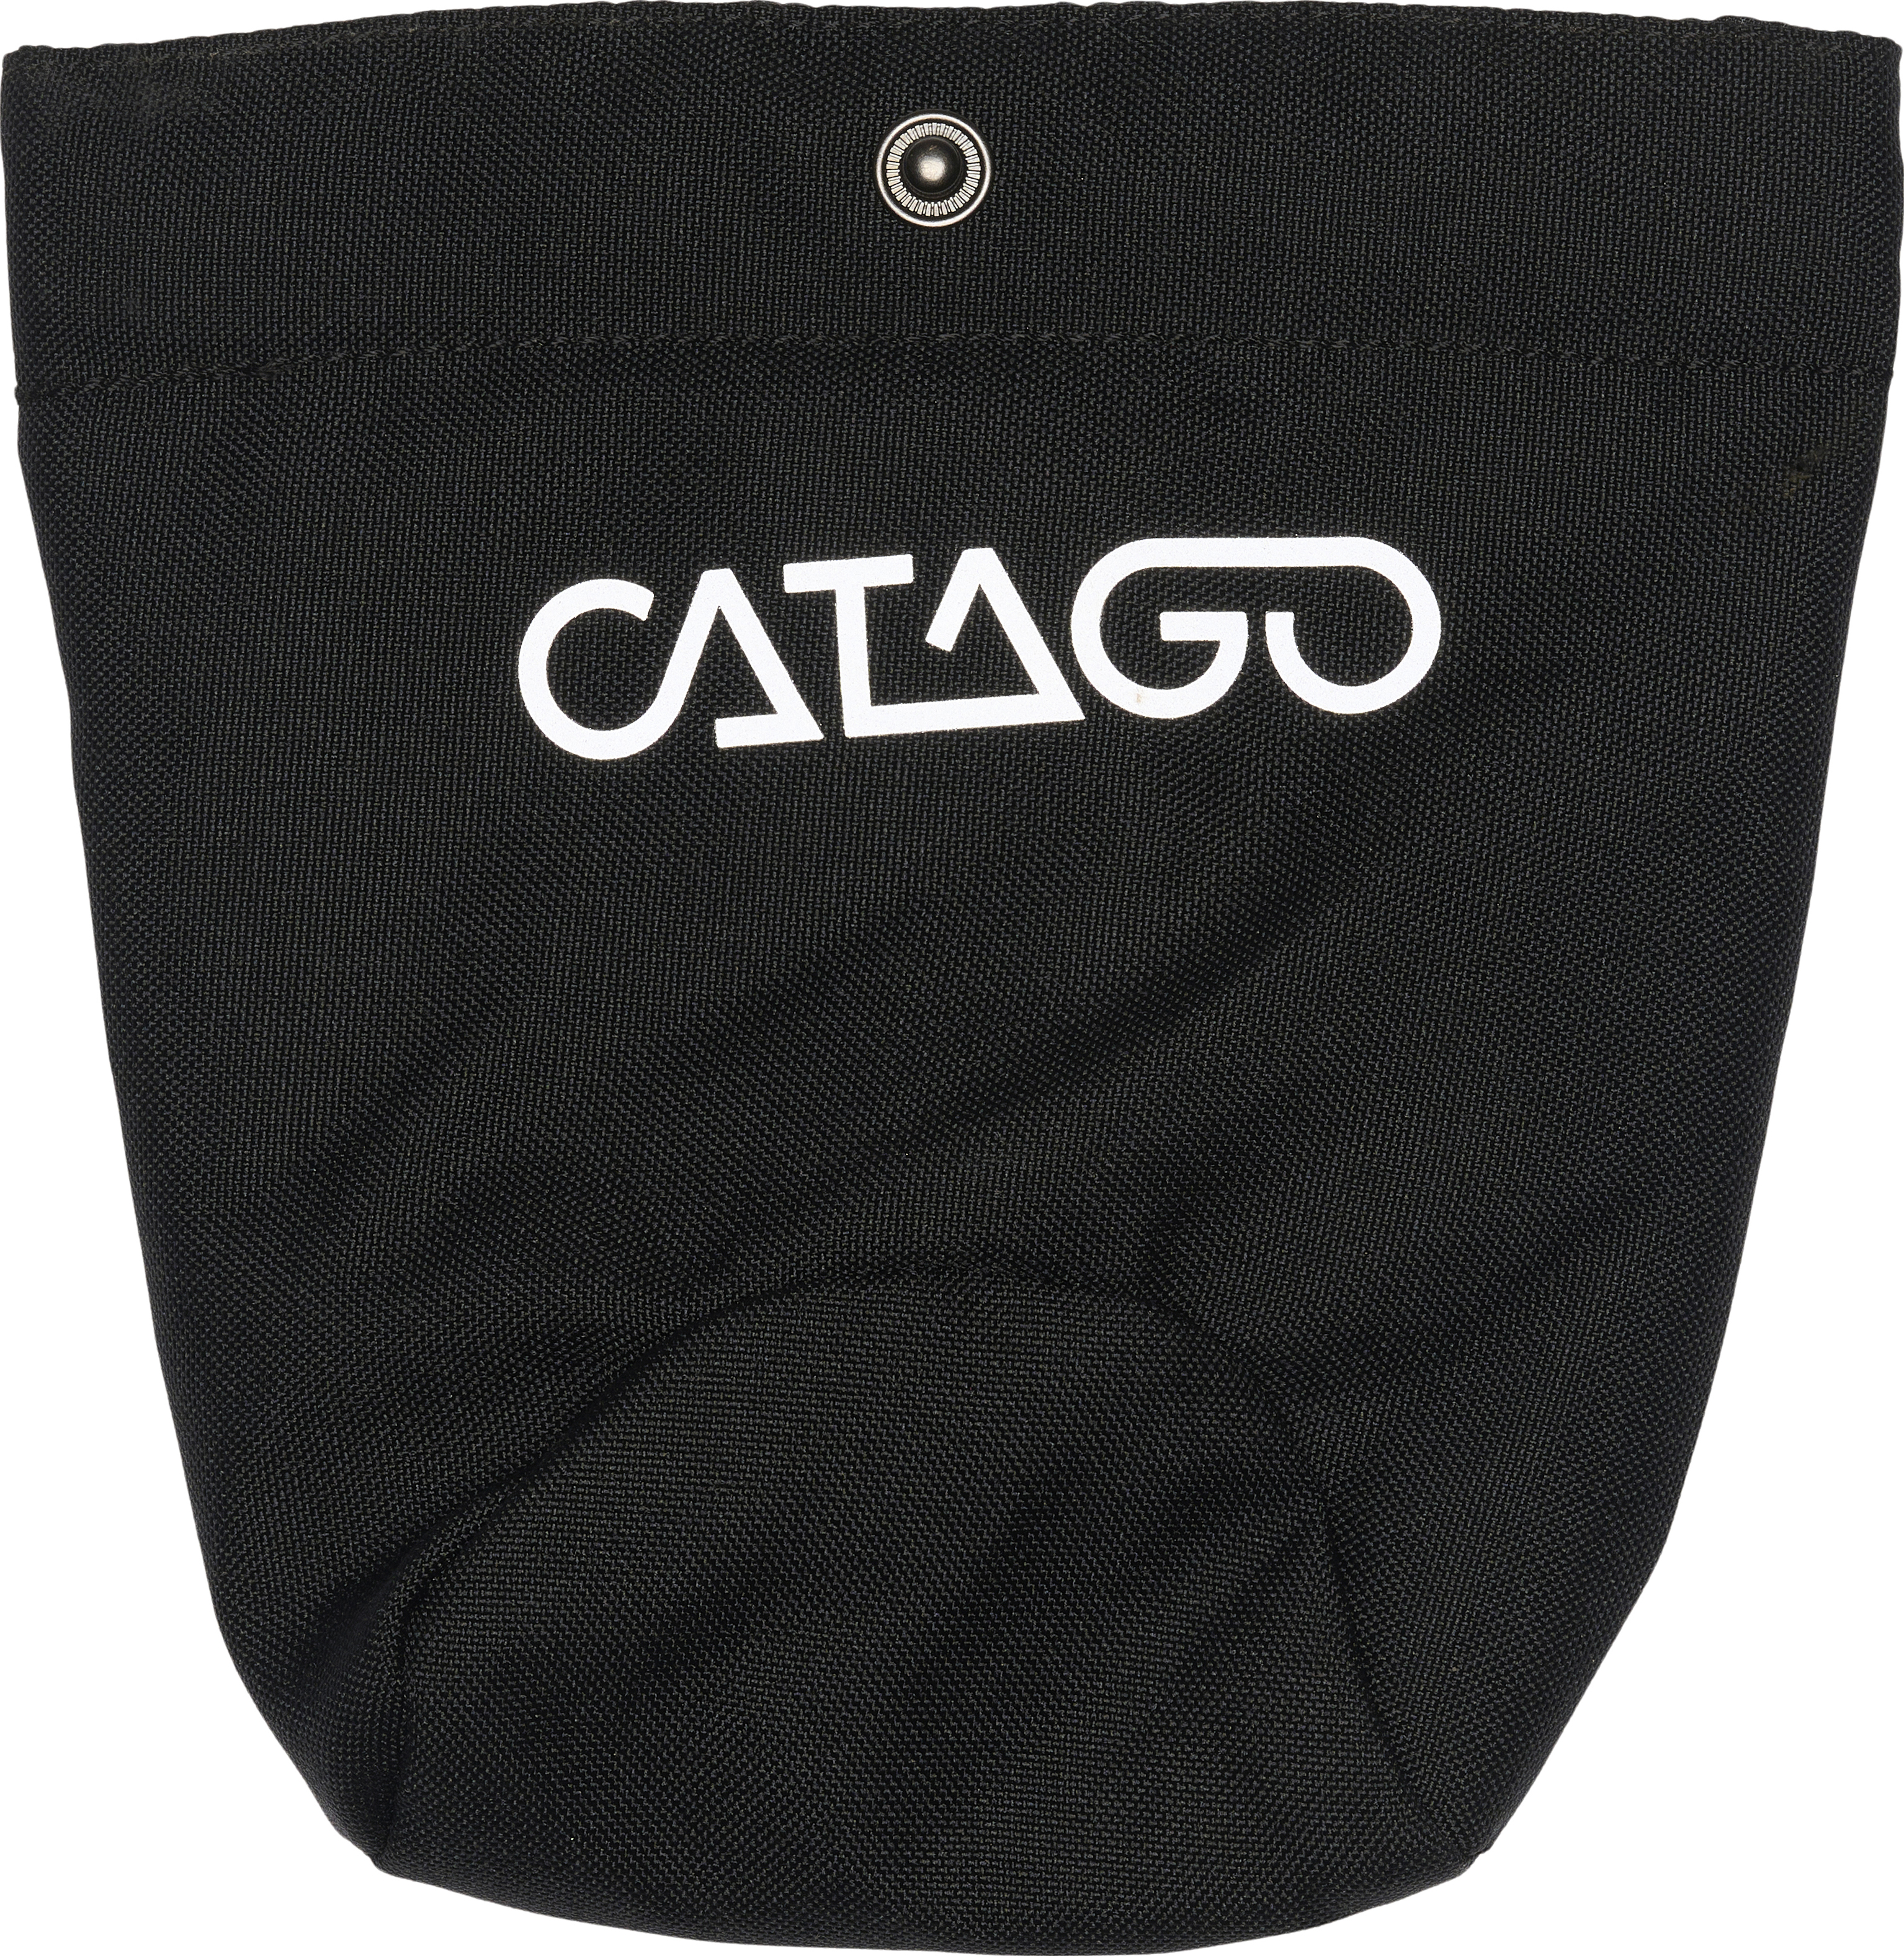 CATAGO Snack Bag For Trainer Jacket - Black, Catago